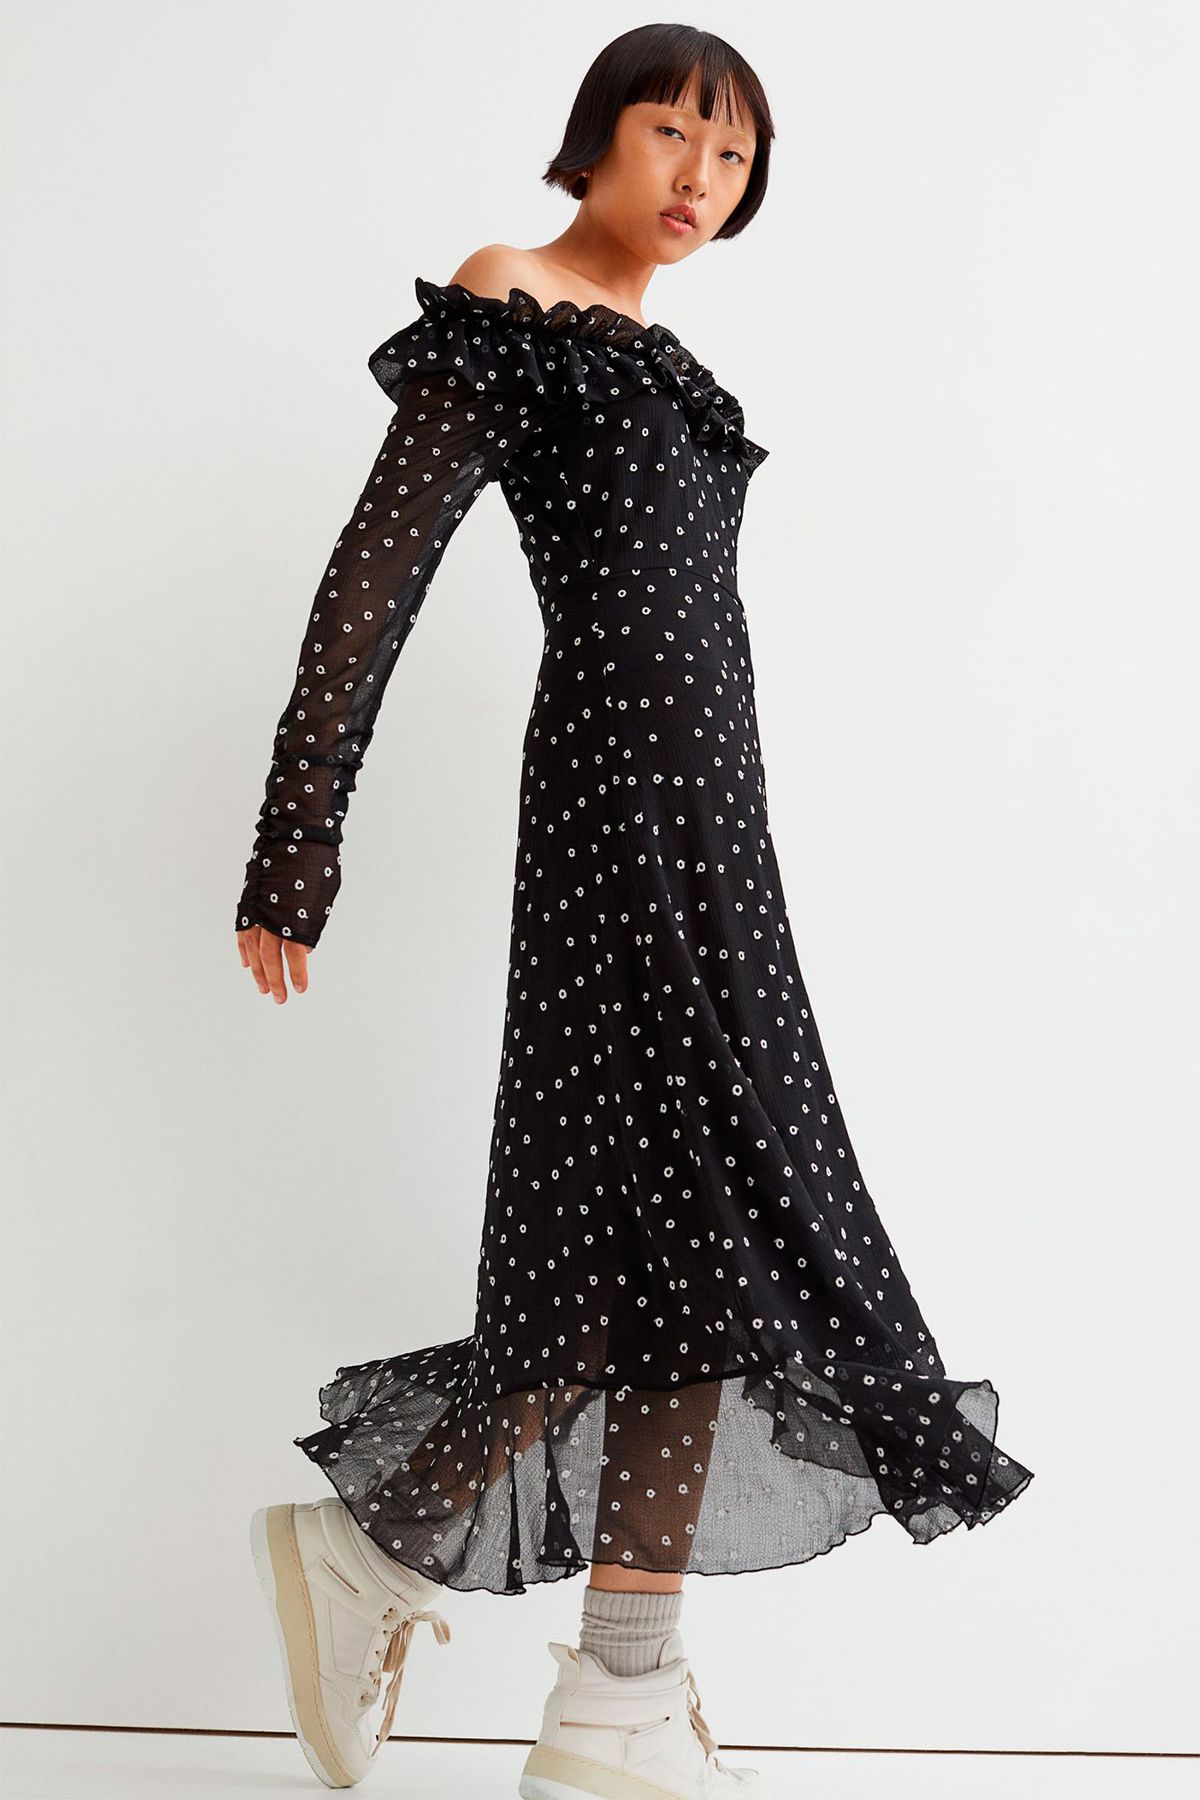 Este vestido de lunares manga larga de H&M es ideal